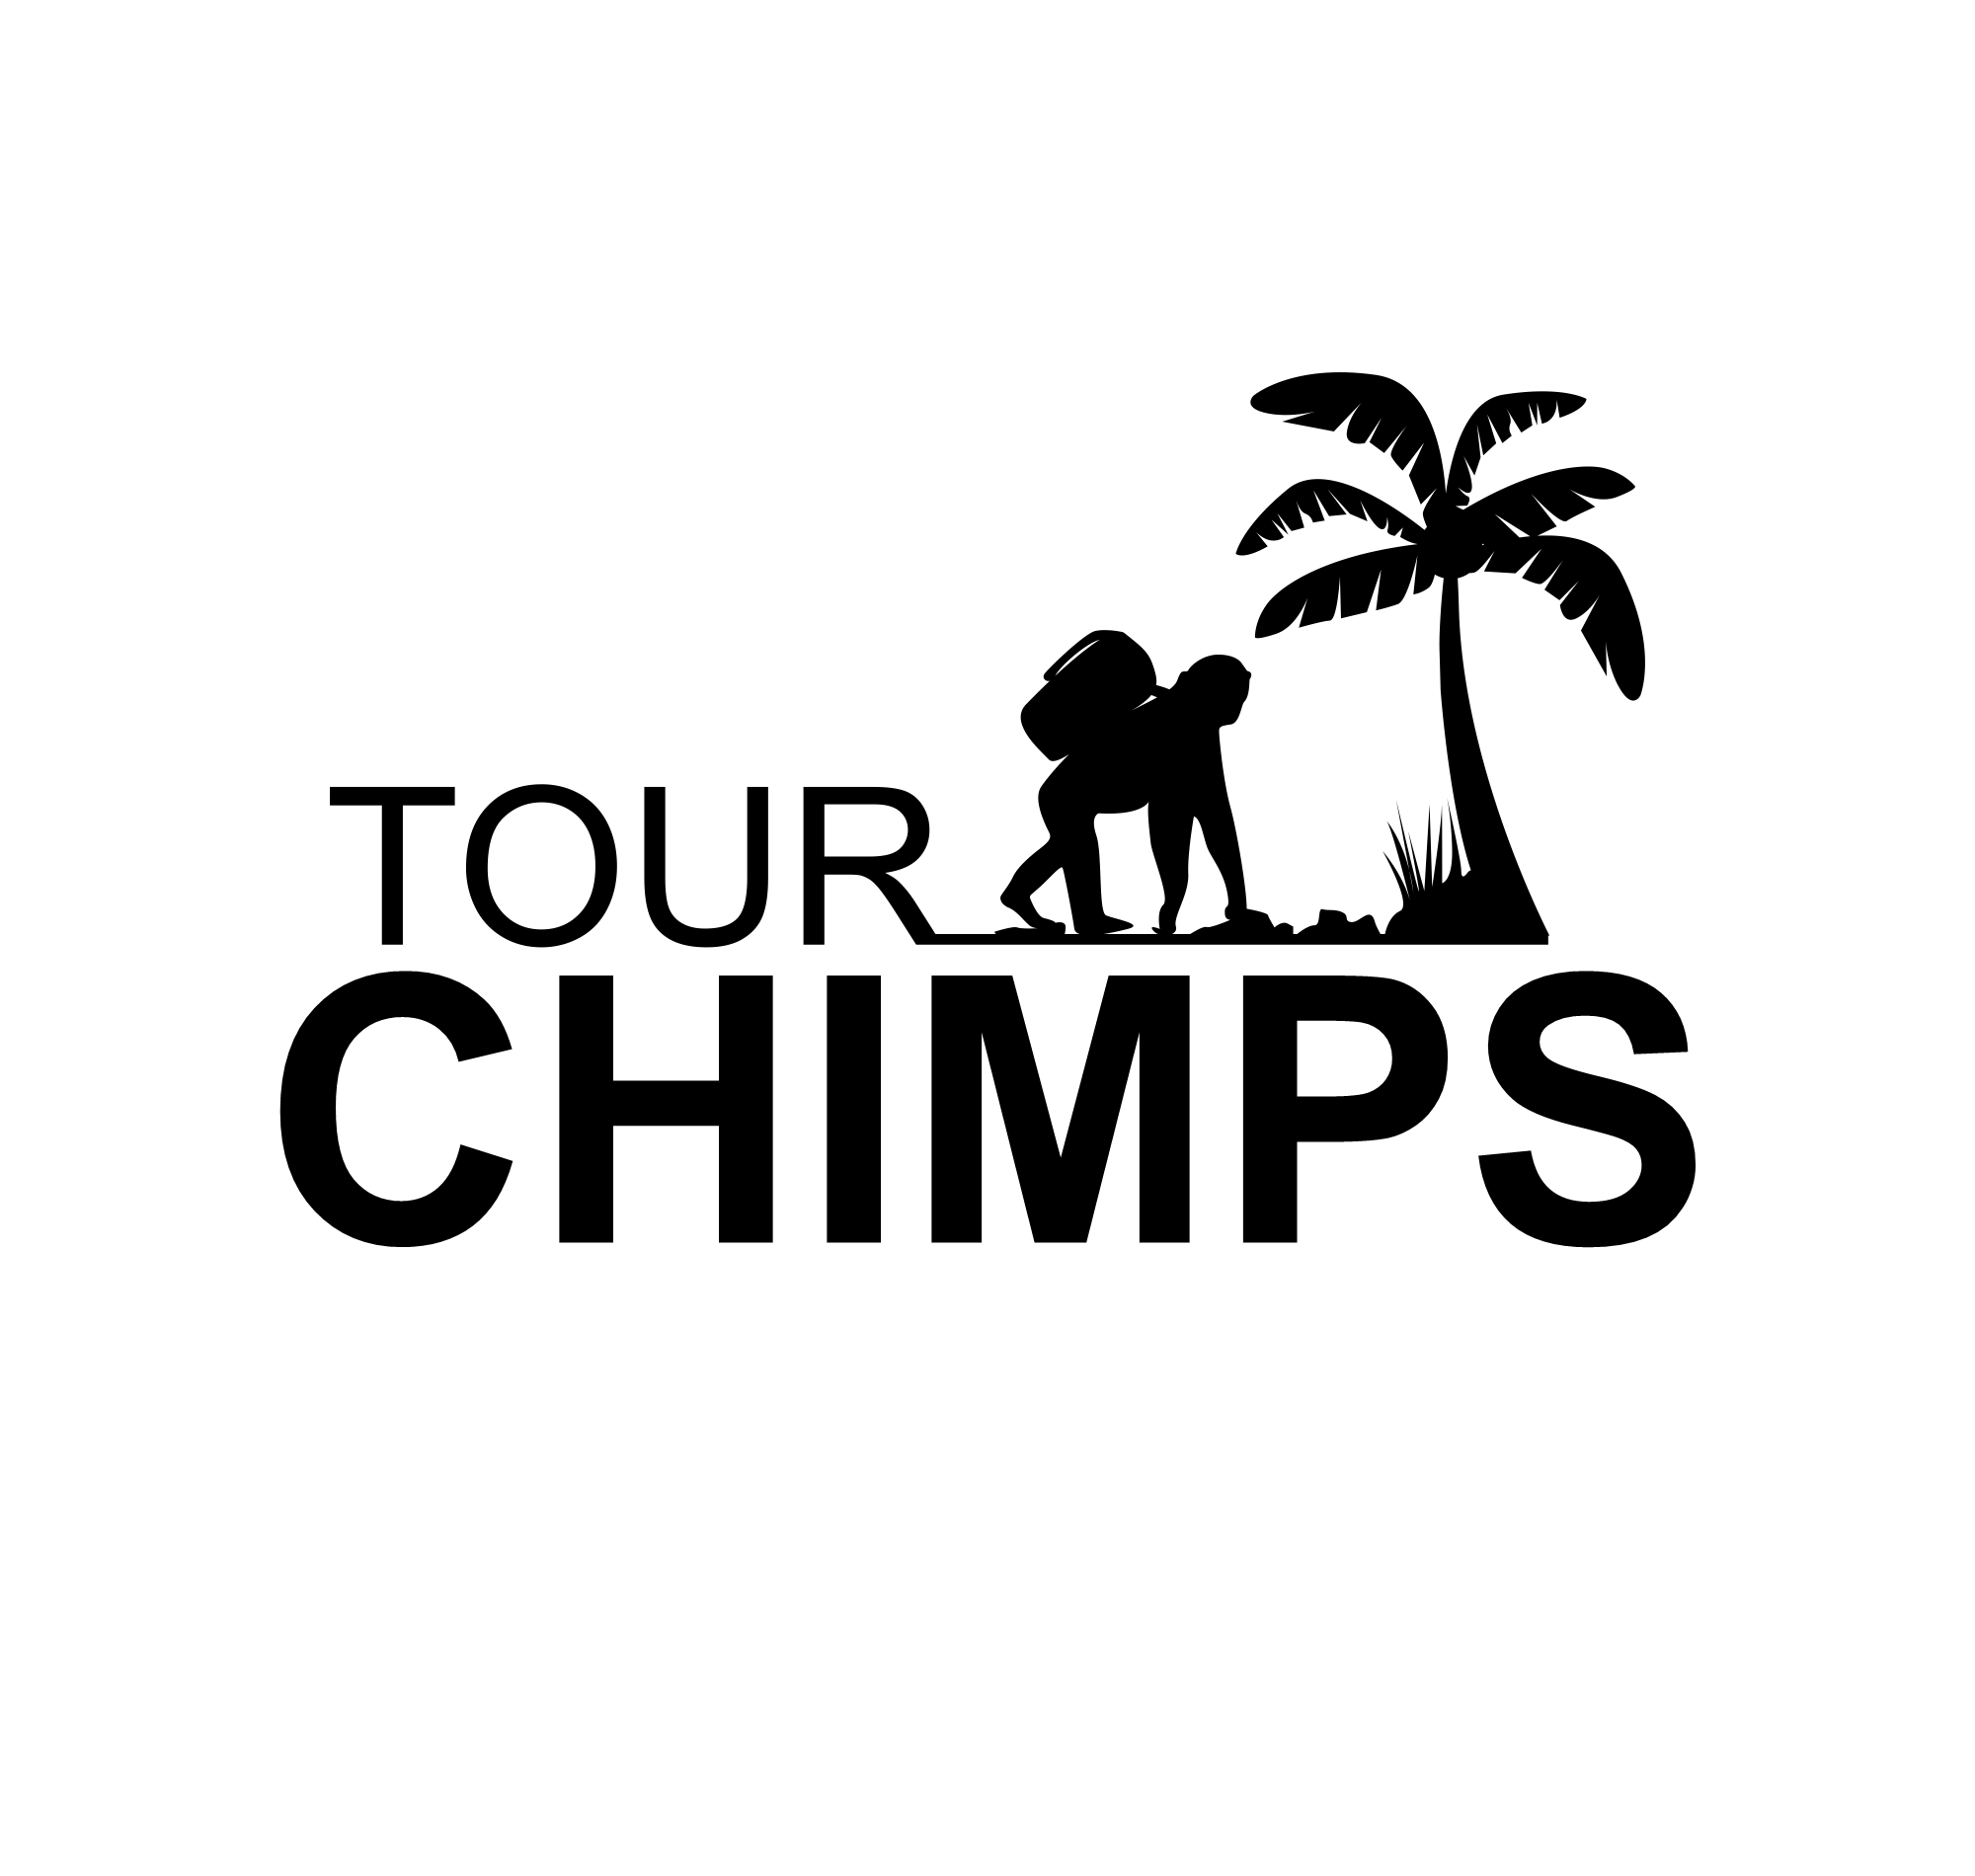 tour company ideas